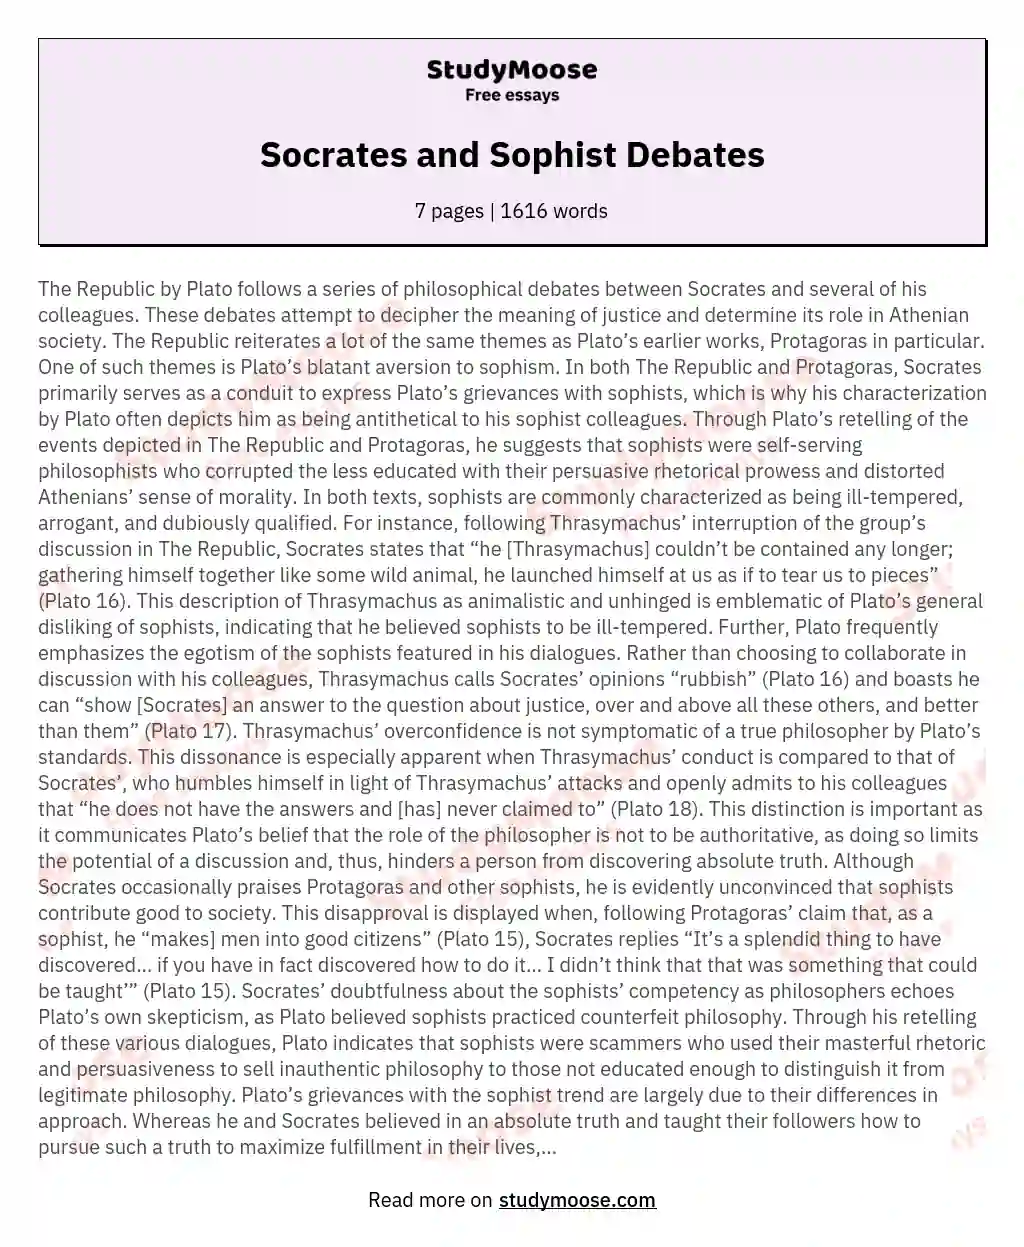 similarities between socrates and sophists